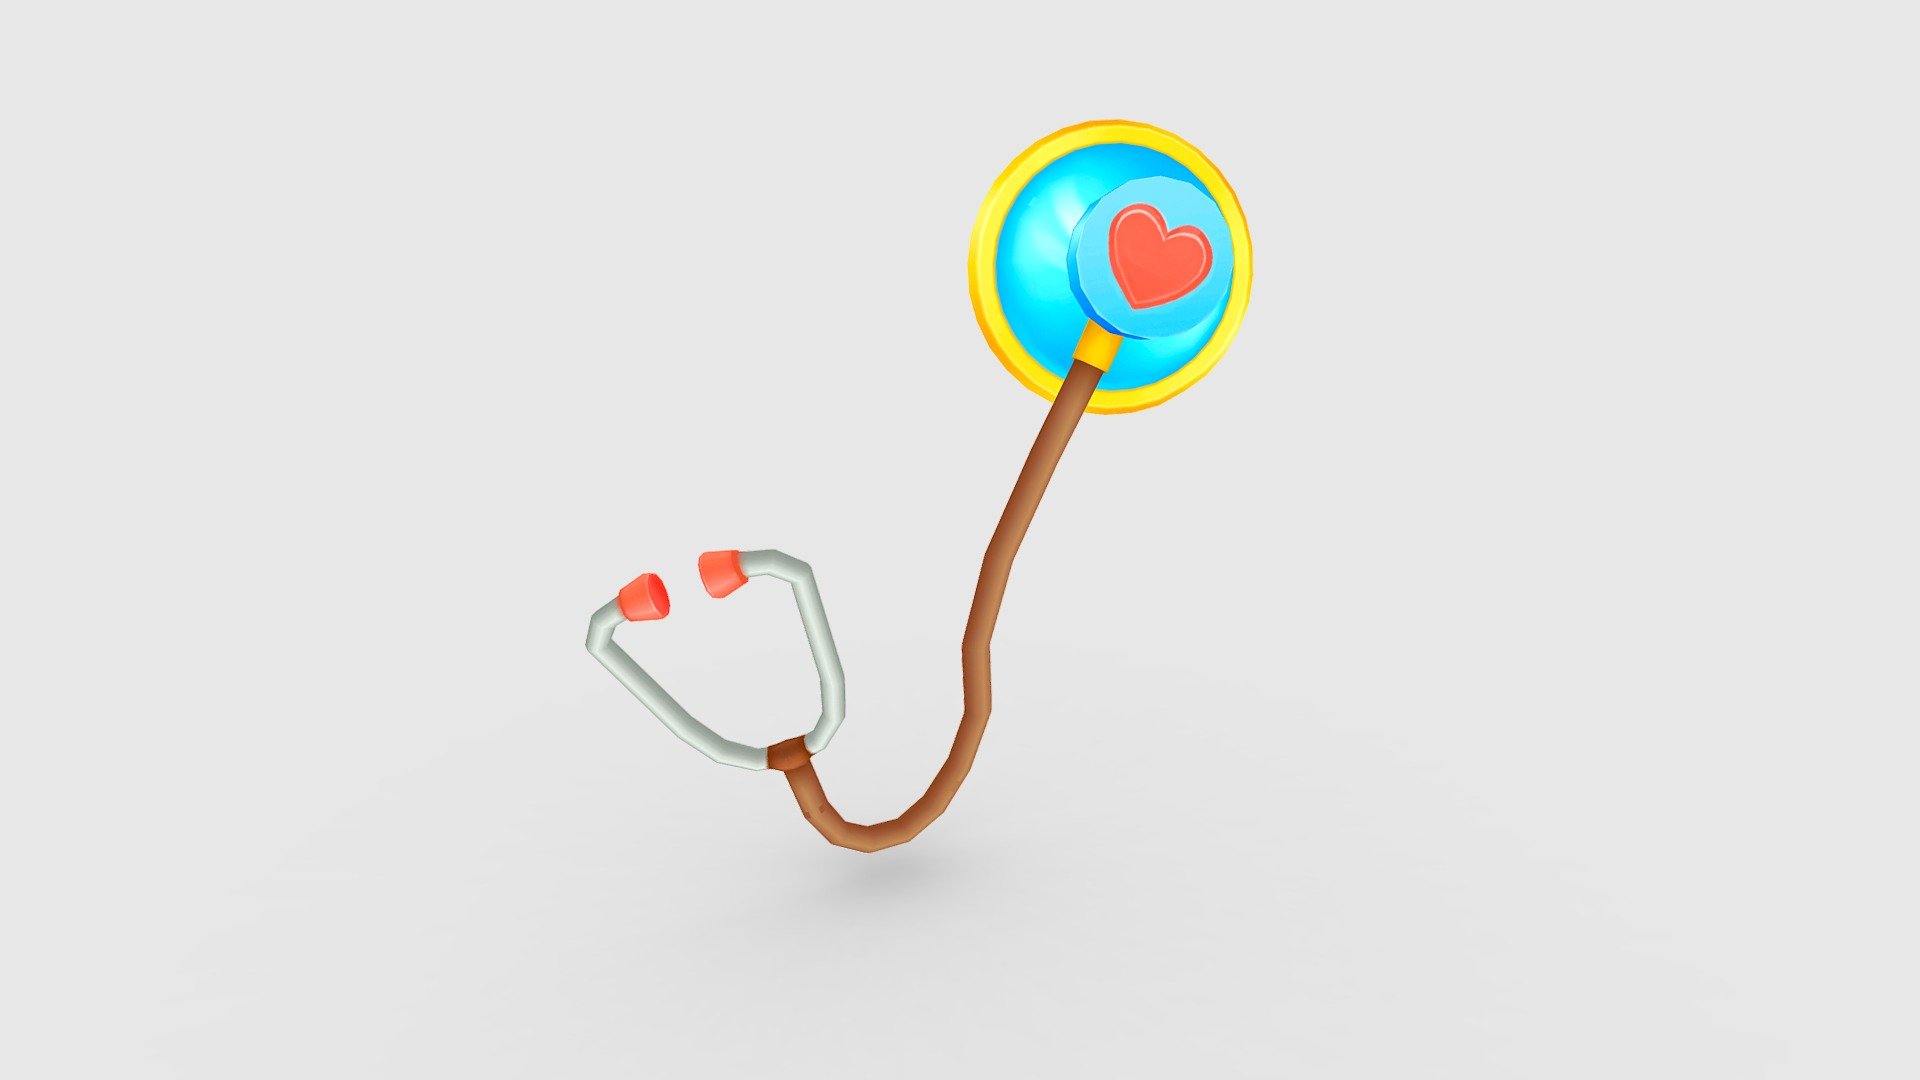 Cartoon stethoscope - medical instrument Low-poly 3D model - Cartoon stethoscope - medical instrument - 3D model by ler_cartoon (@lerrrrr) 3d model